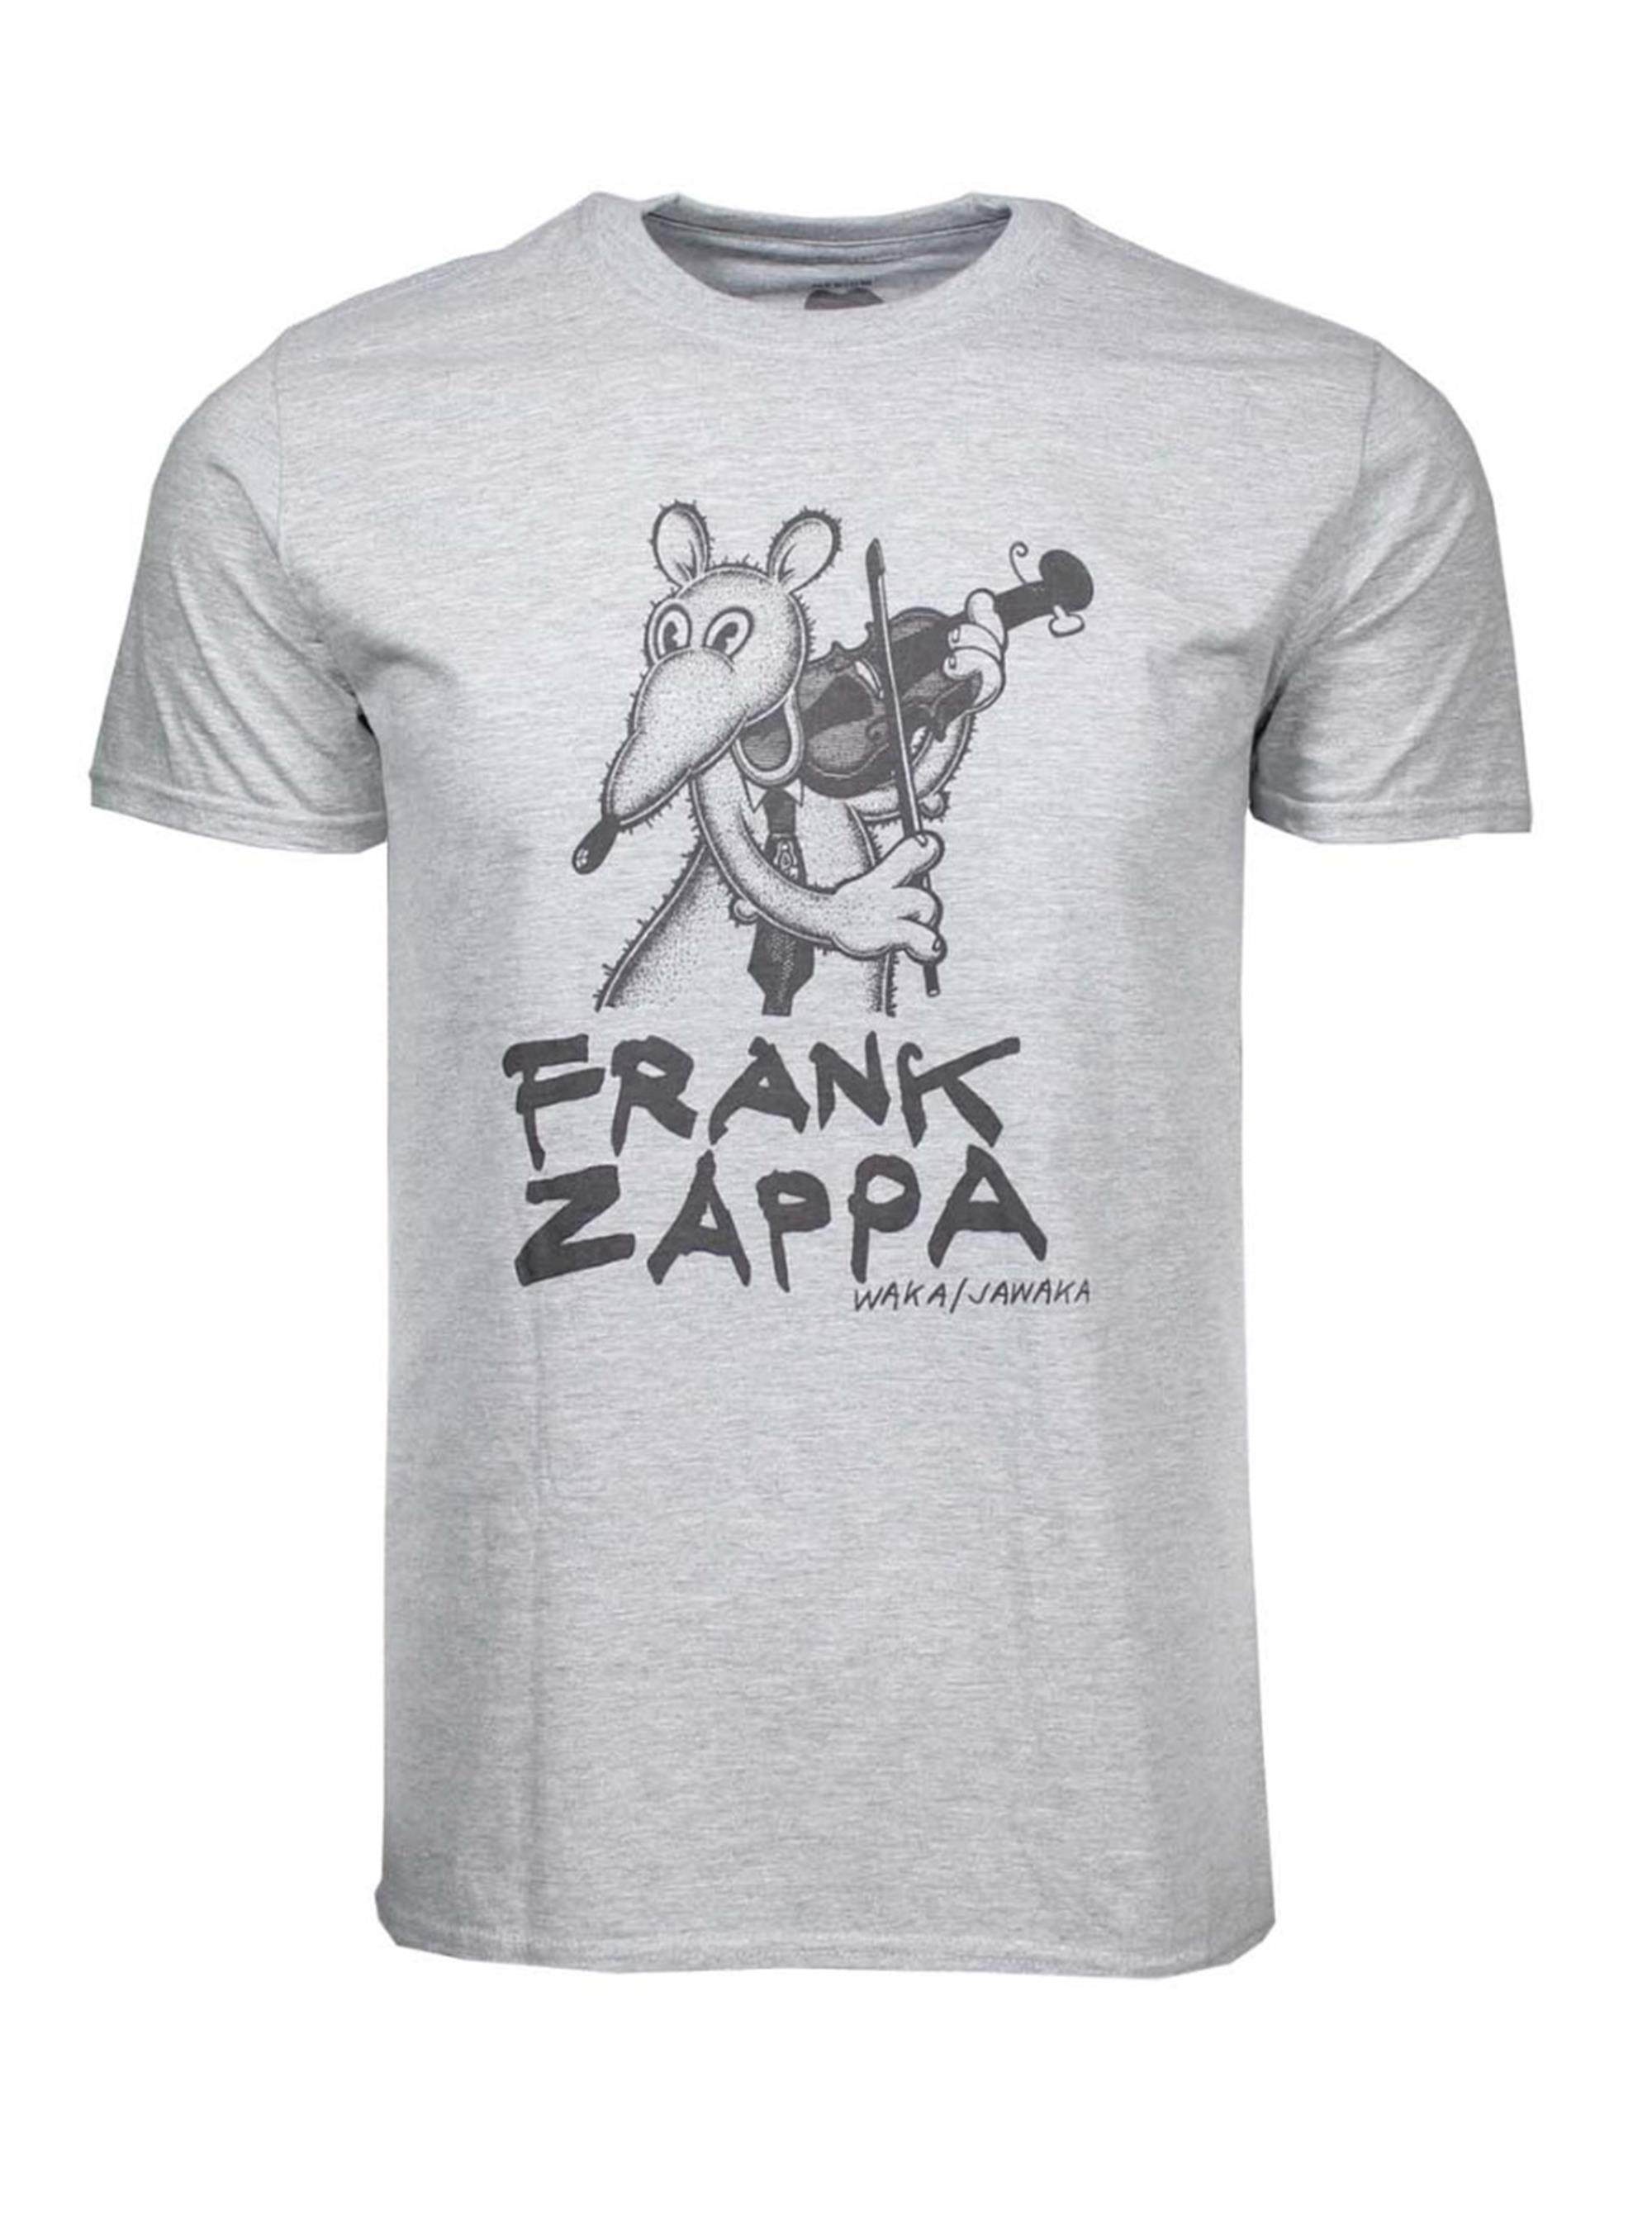 Frank Zappa Waka Jawaka T-Shirt